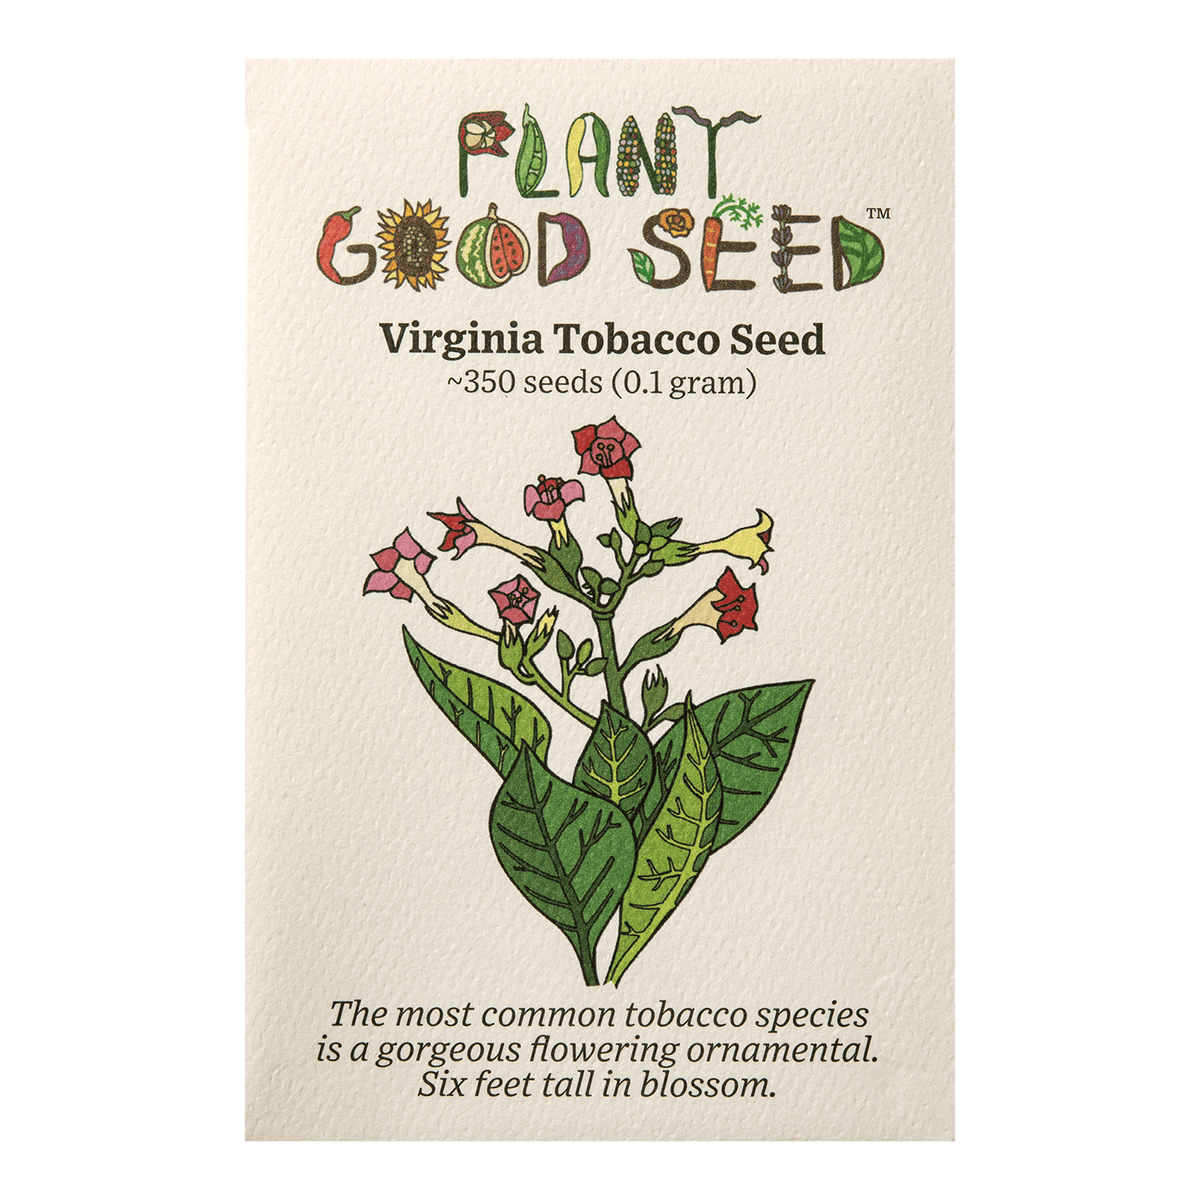 Virginia Tobacco Seed (Tabacum species)